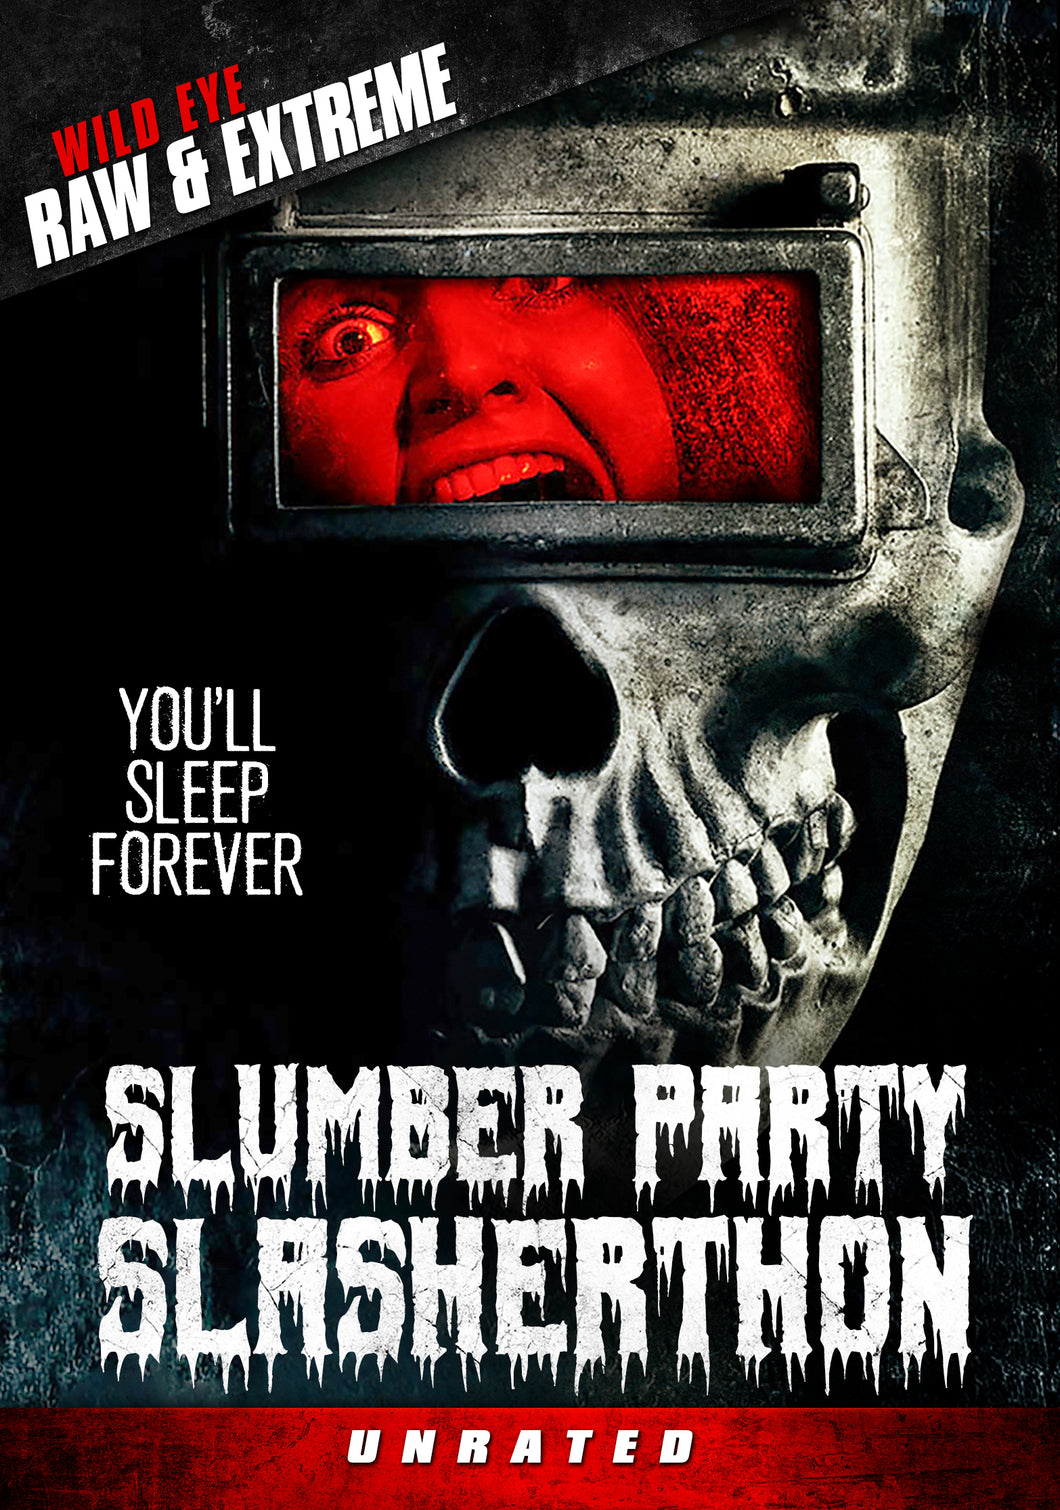 Slumber Party Slashathon (DVD)